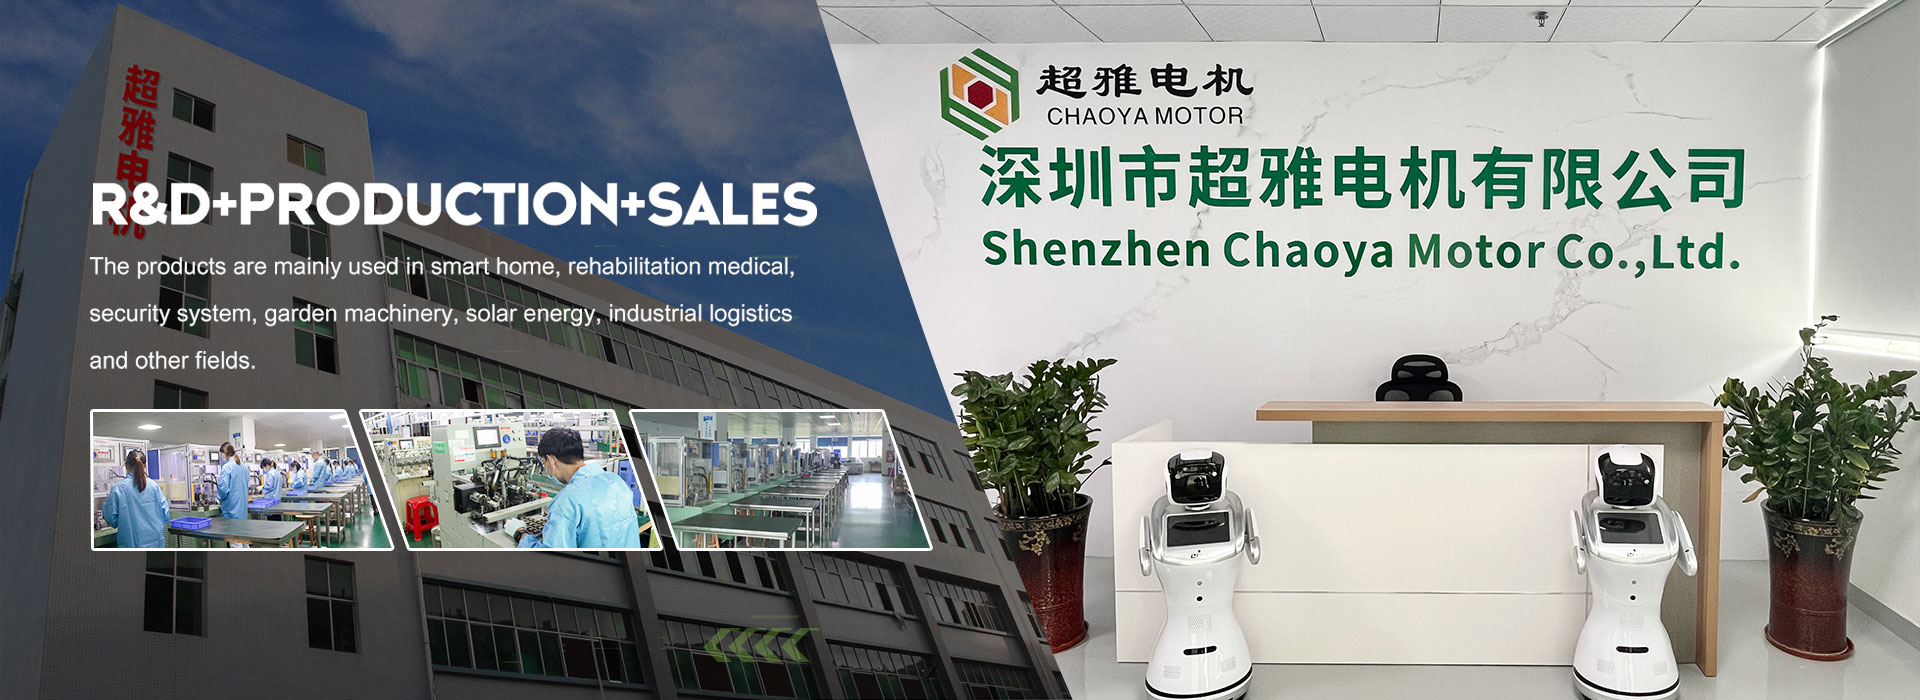 Shenzhen Chaoya Motor Co., Ltd.